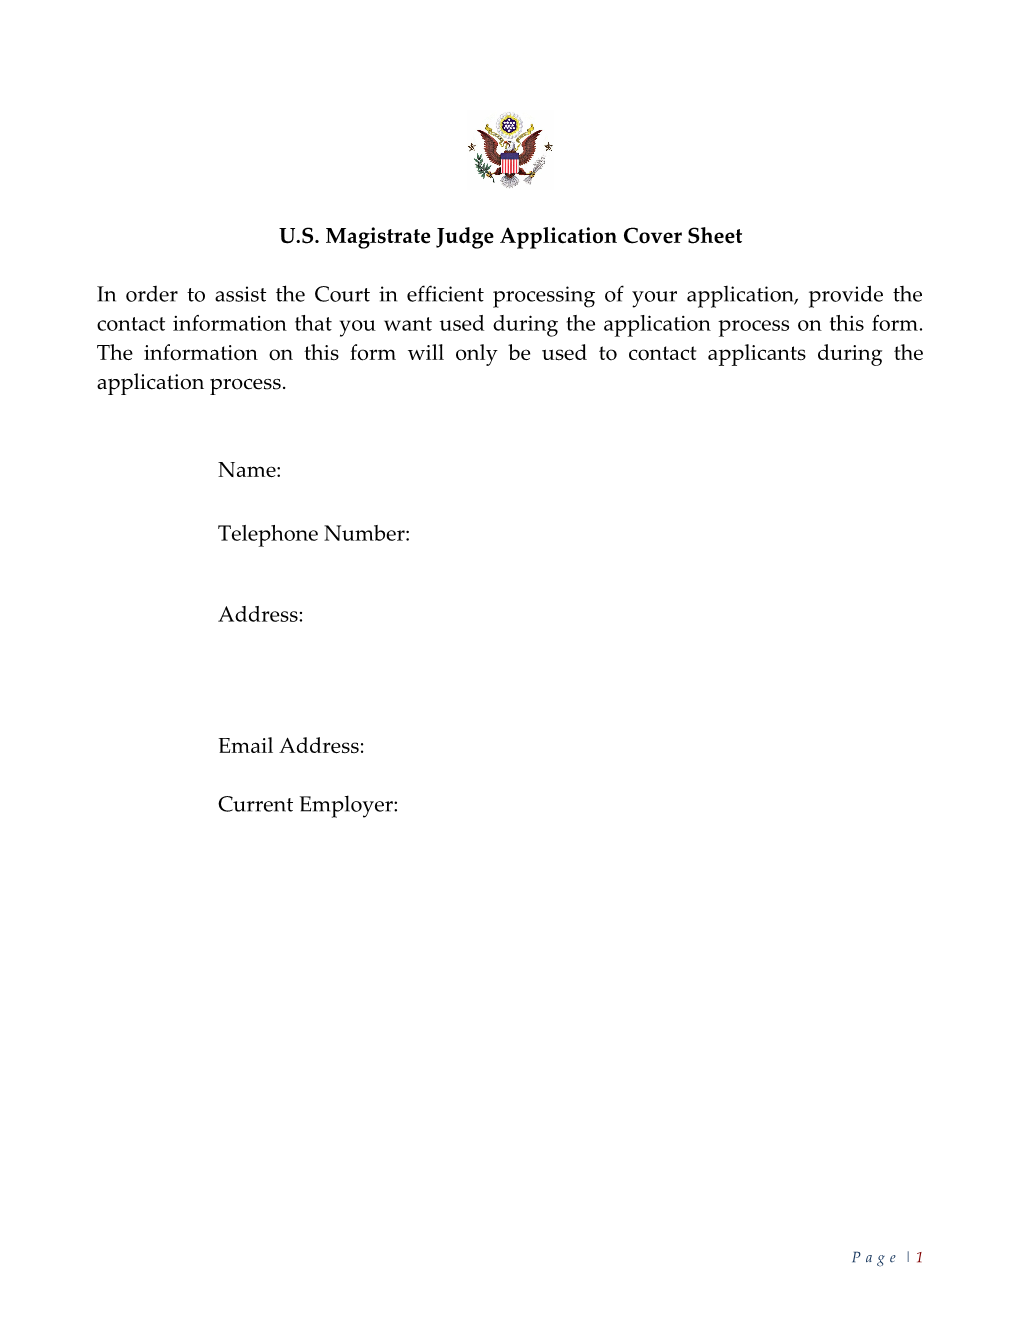 U.S. Magistrate Judge Application